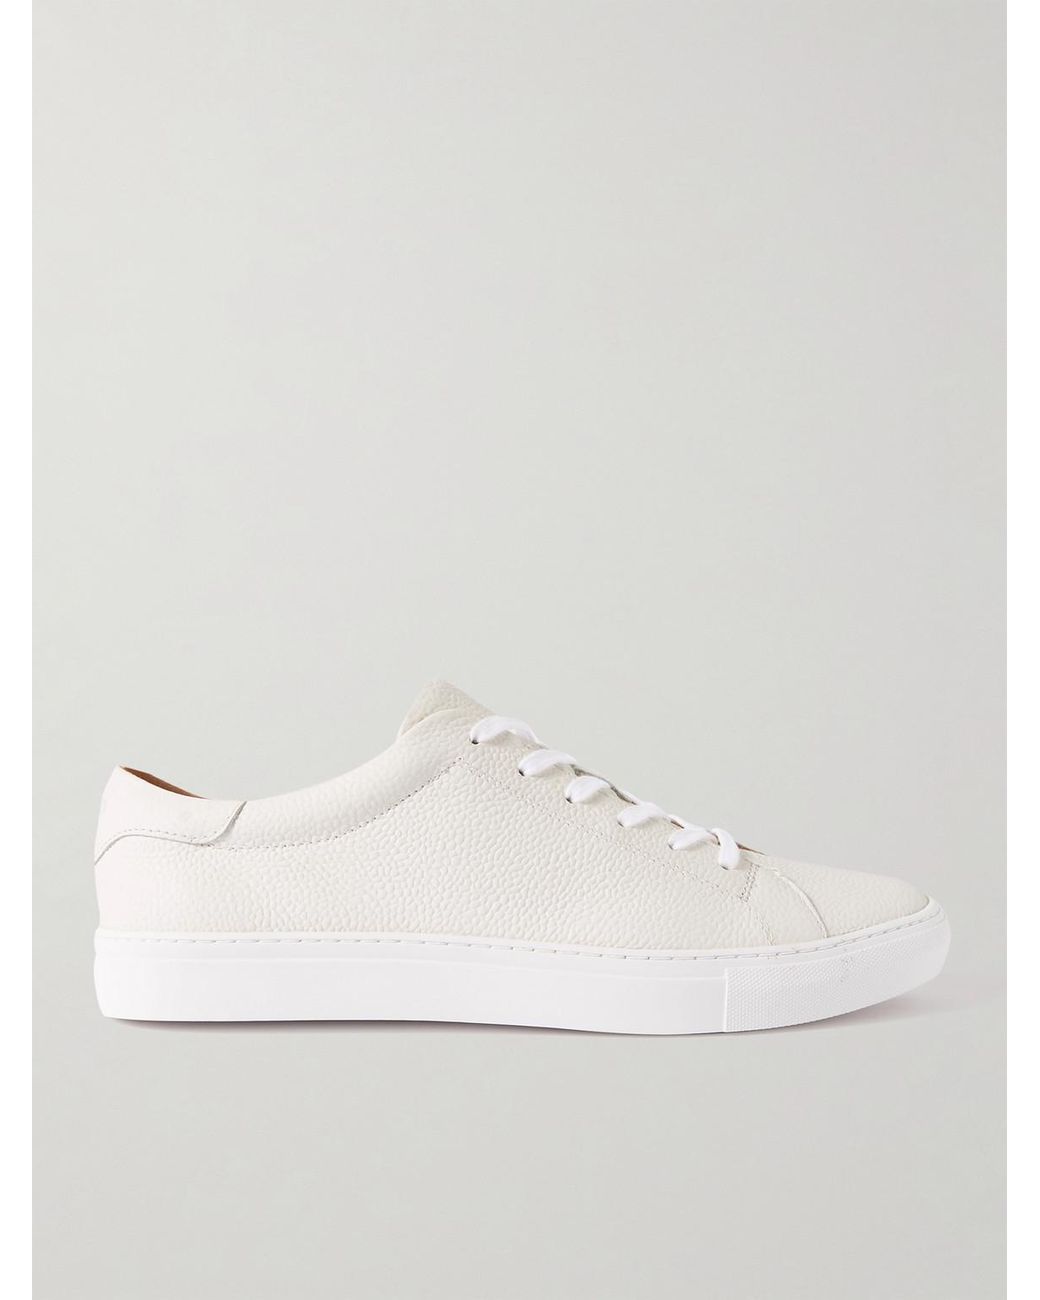 Polo Ralph Lauren Jermain Ii Full-grain Leather Sneakers in White for ...